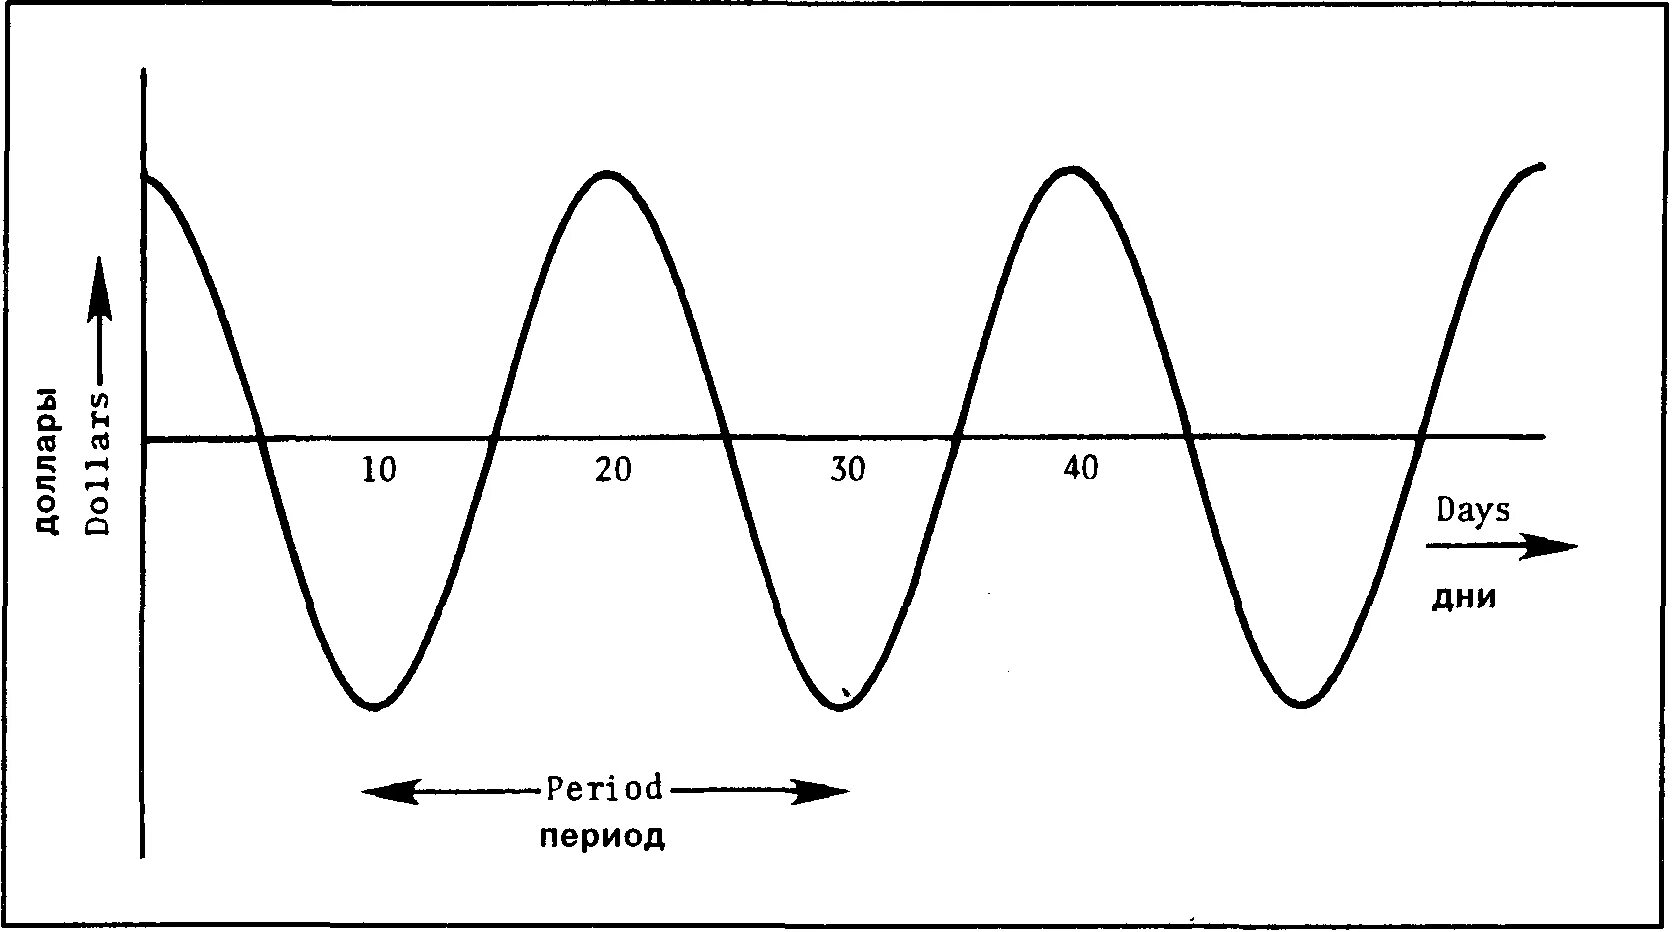 Периода на 20 секунд. Период волны. Период. RF,FYBQ период. Period v kalebanie.